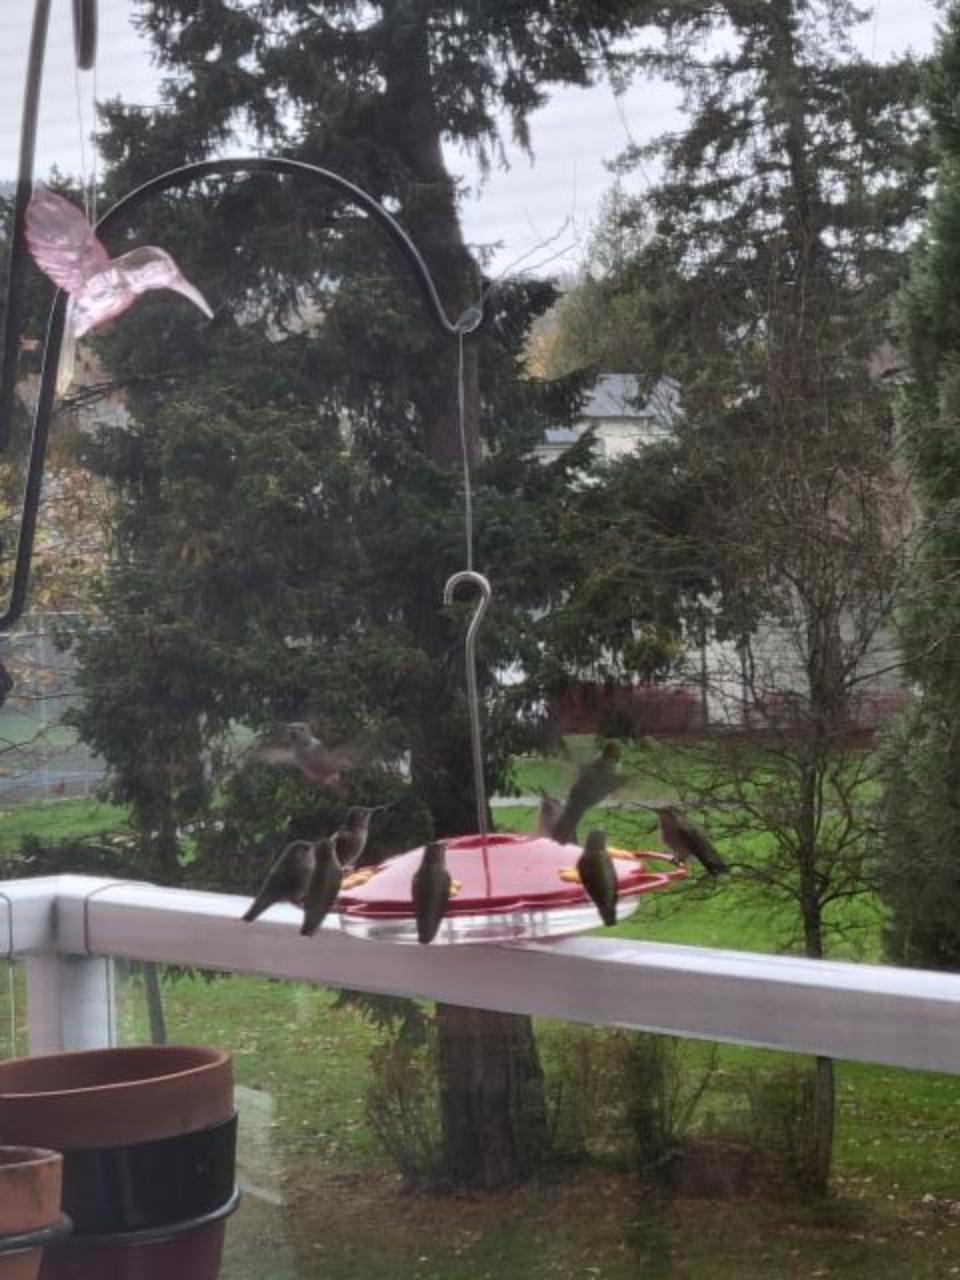 Hummingbirds at the feeder